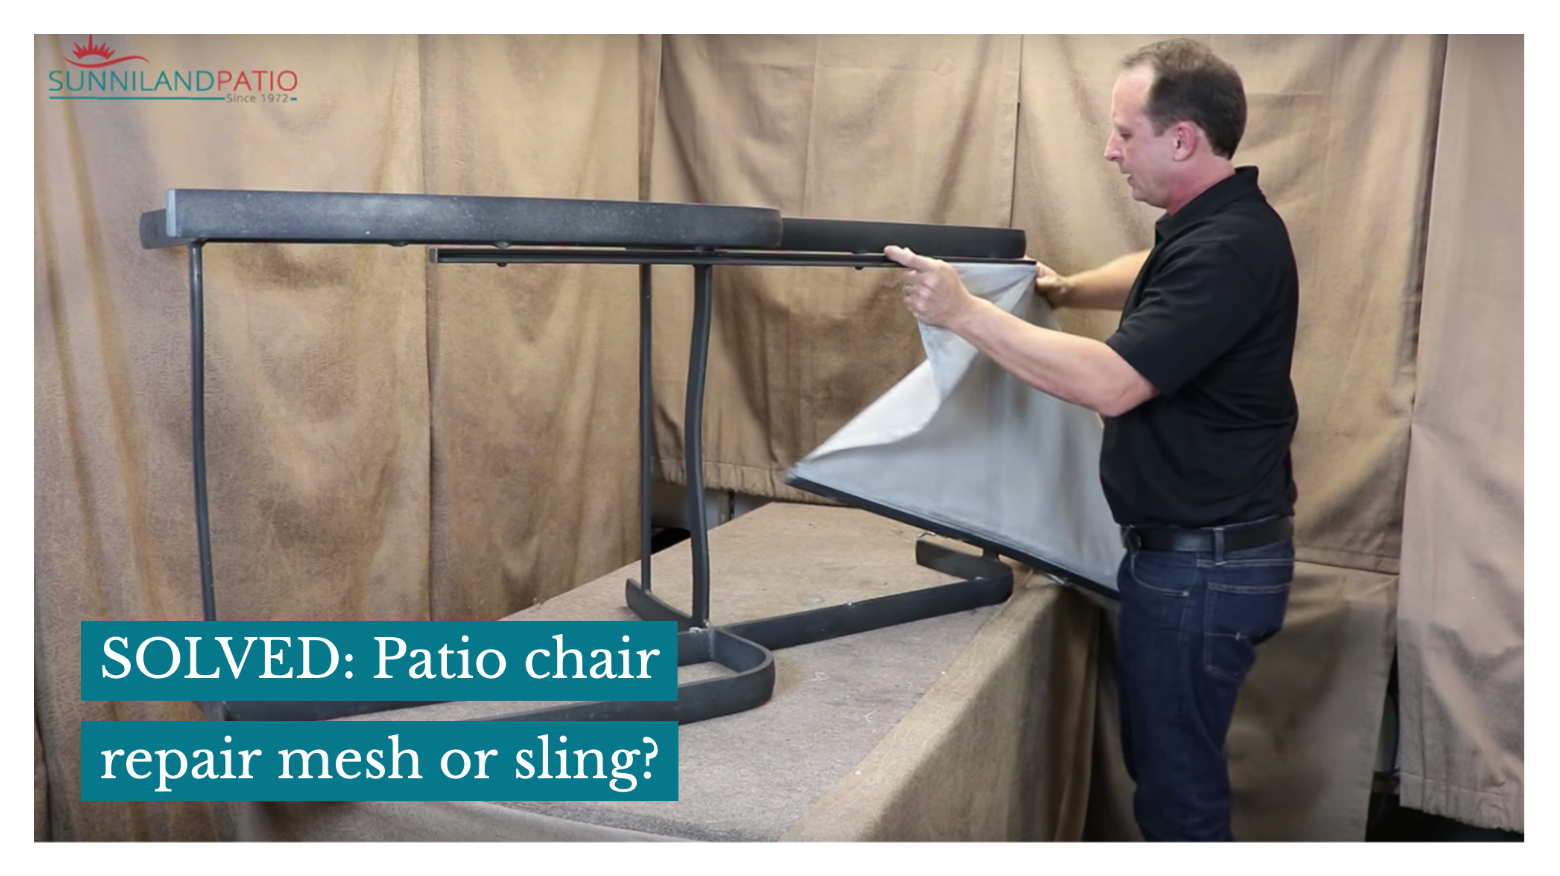 SOLVED: Patio chair repair mesh or sling?